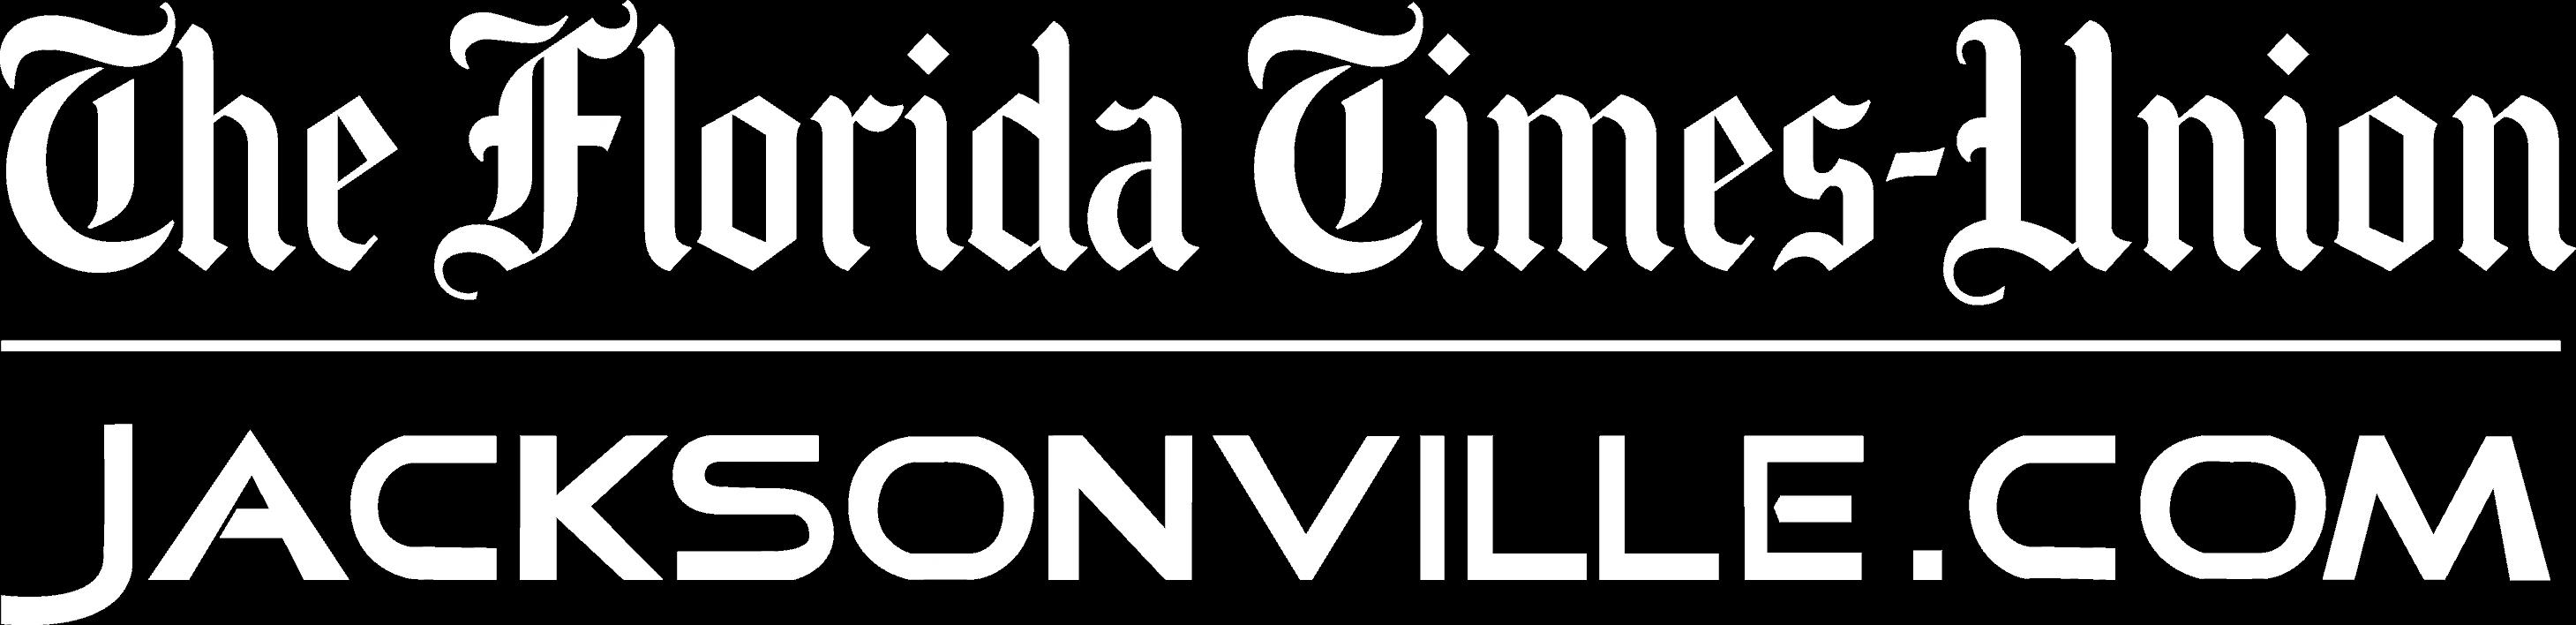 Florida Times-Union, Jacksonville.com logo